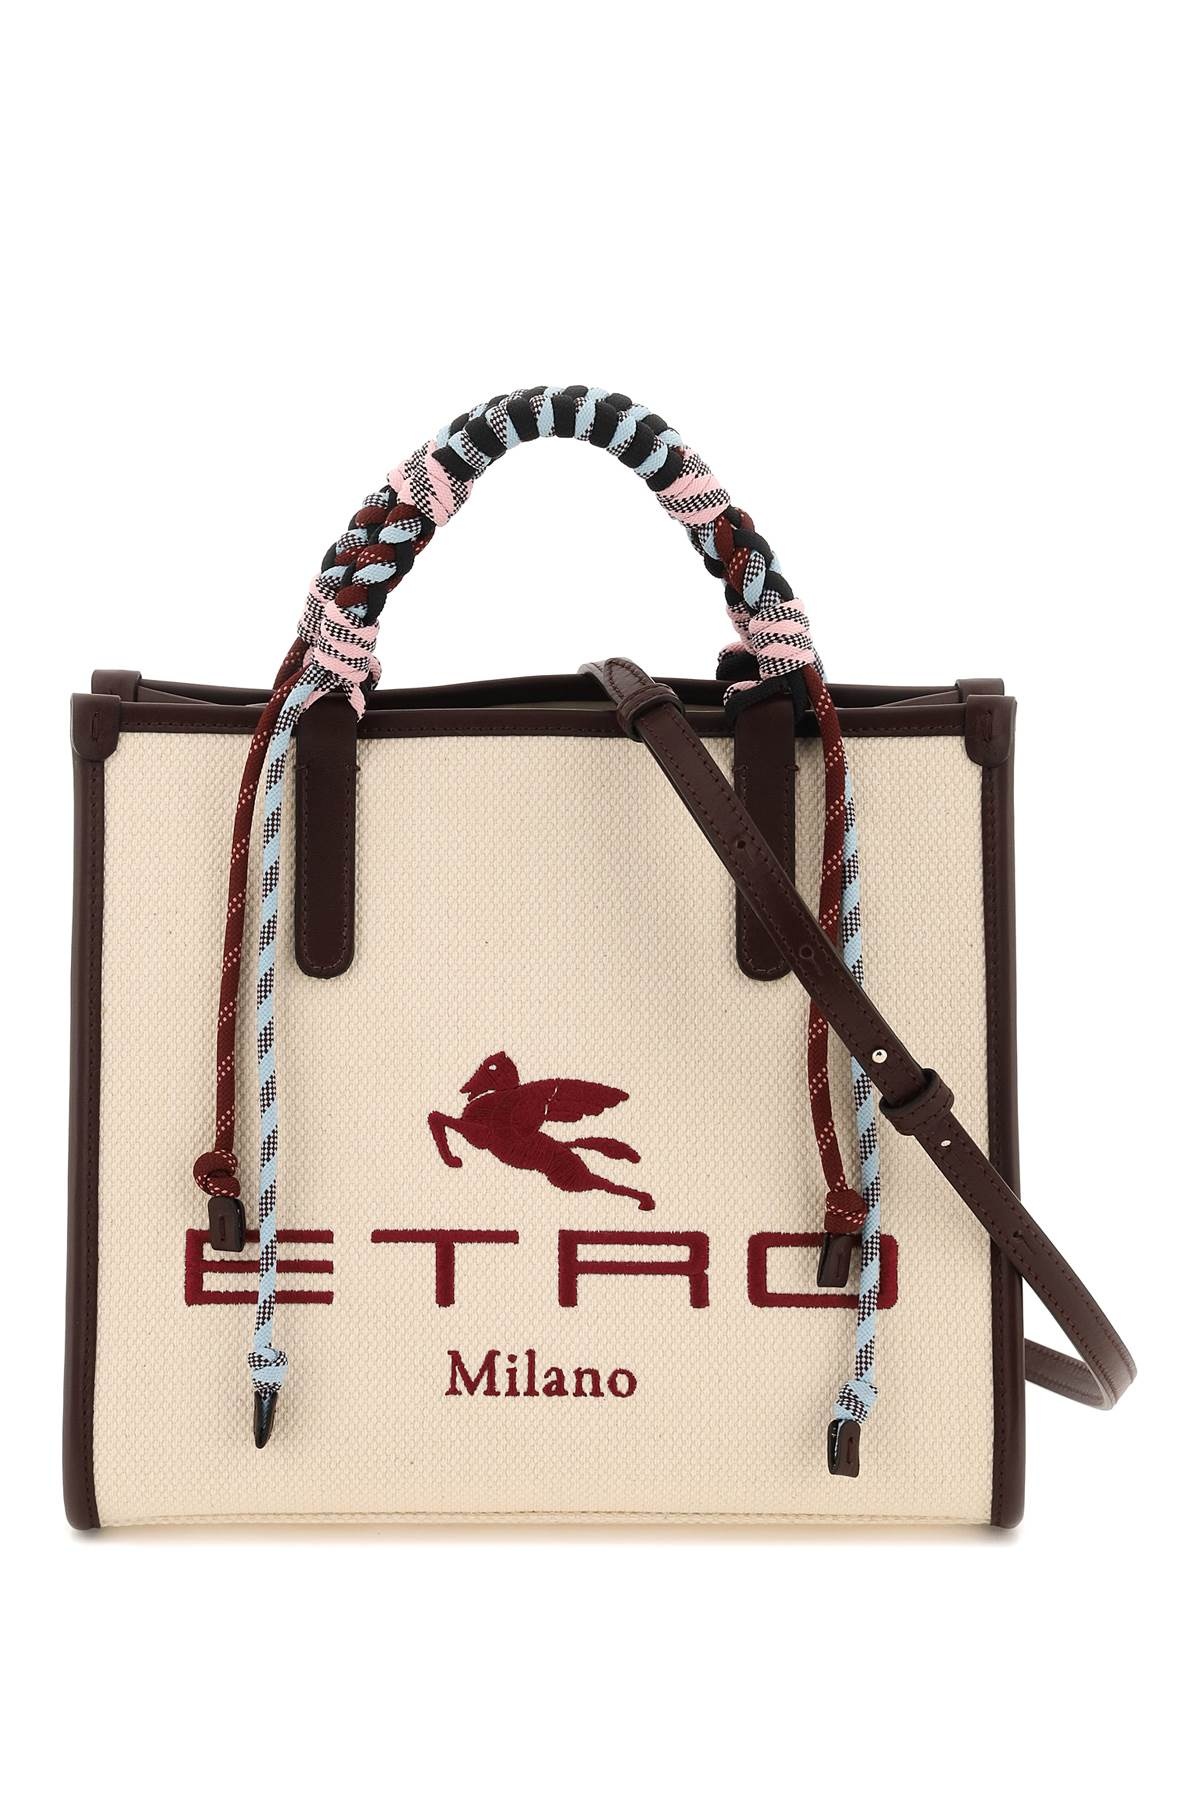 Etro, Bags, Etro Milano Velvet Tote Bag